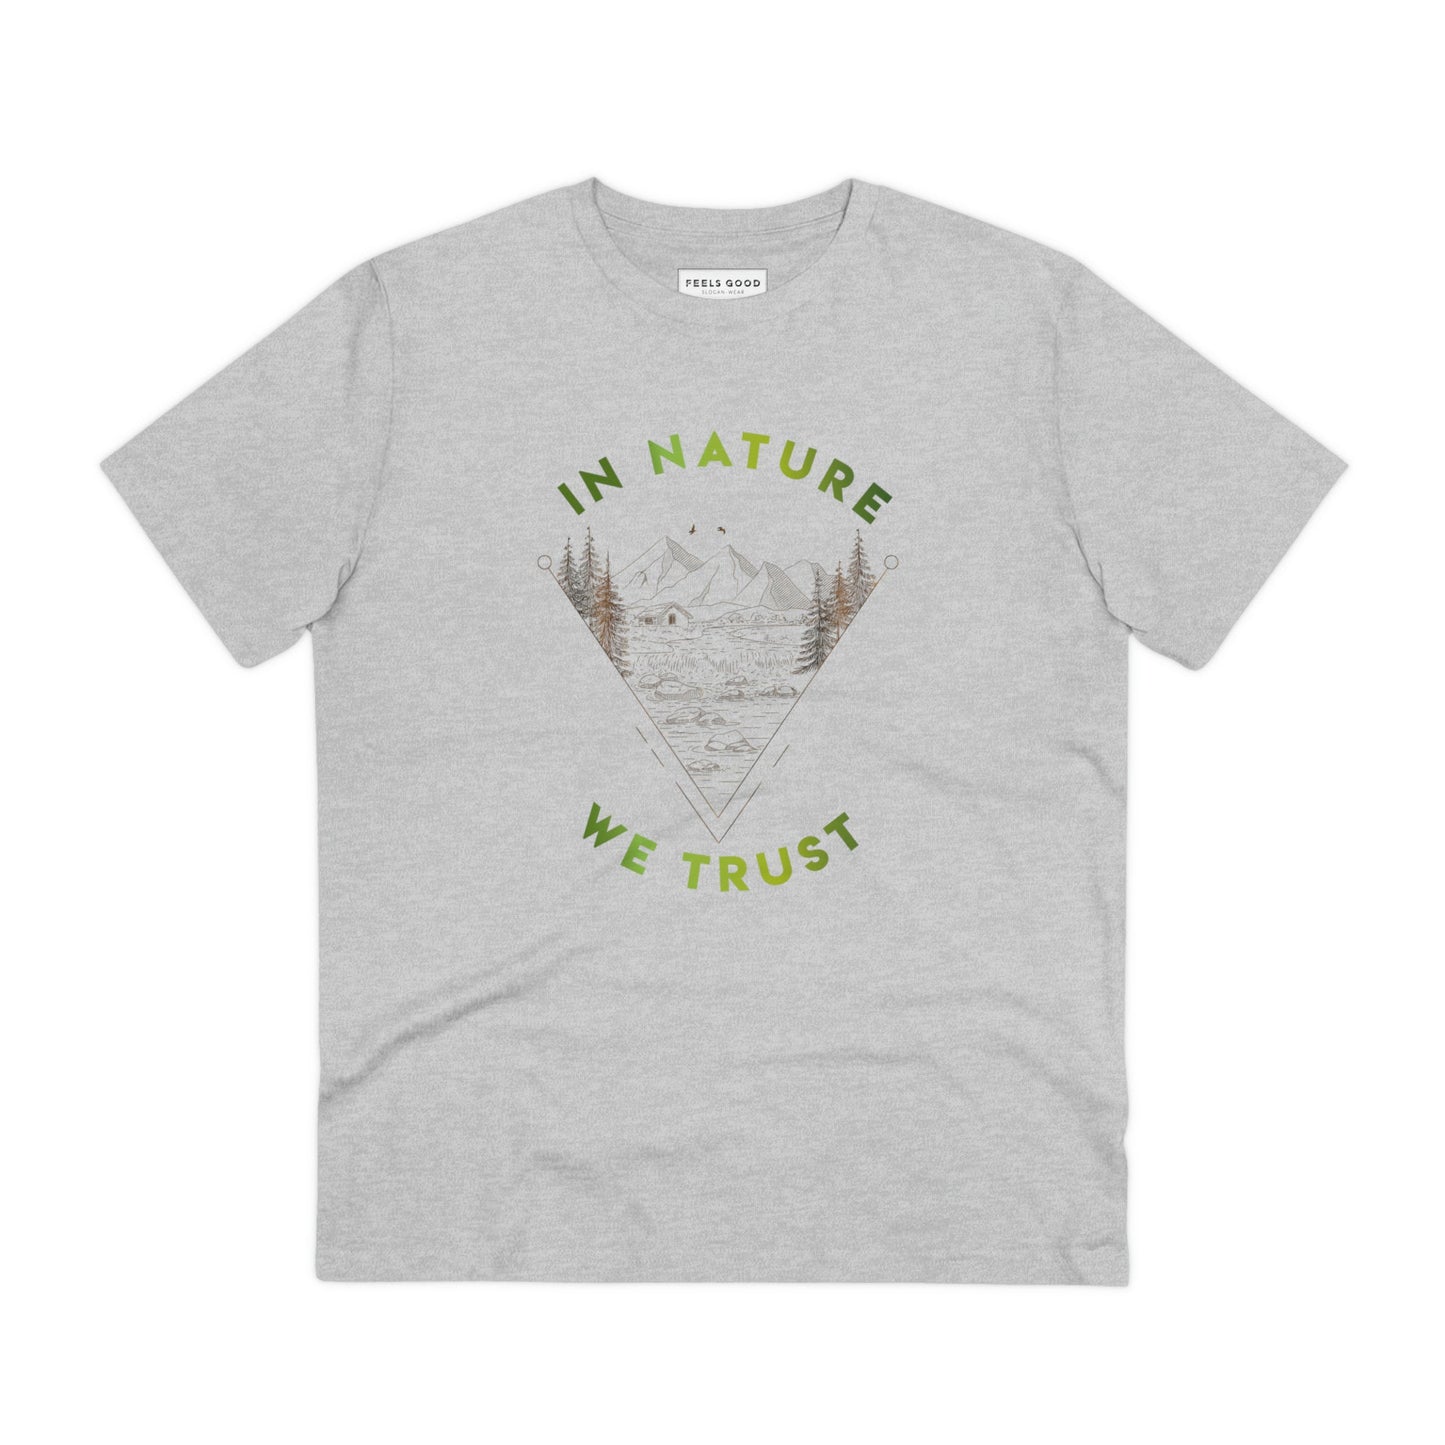 Organic Cotton 'In Nature We Trust' T-shirt - Fun Tshirt